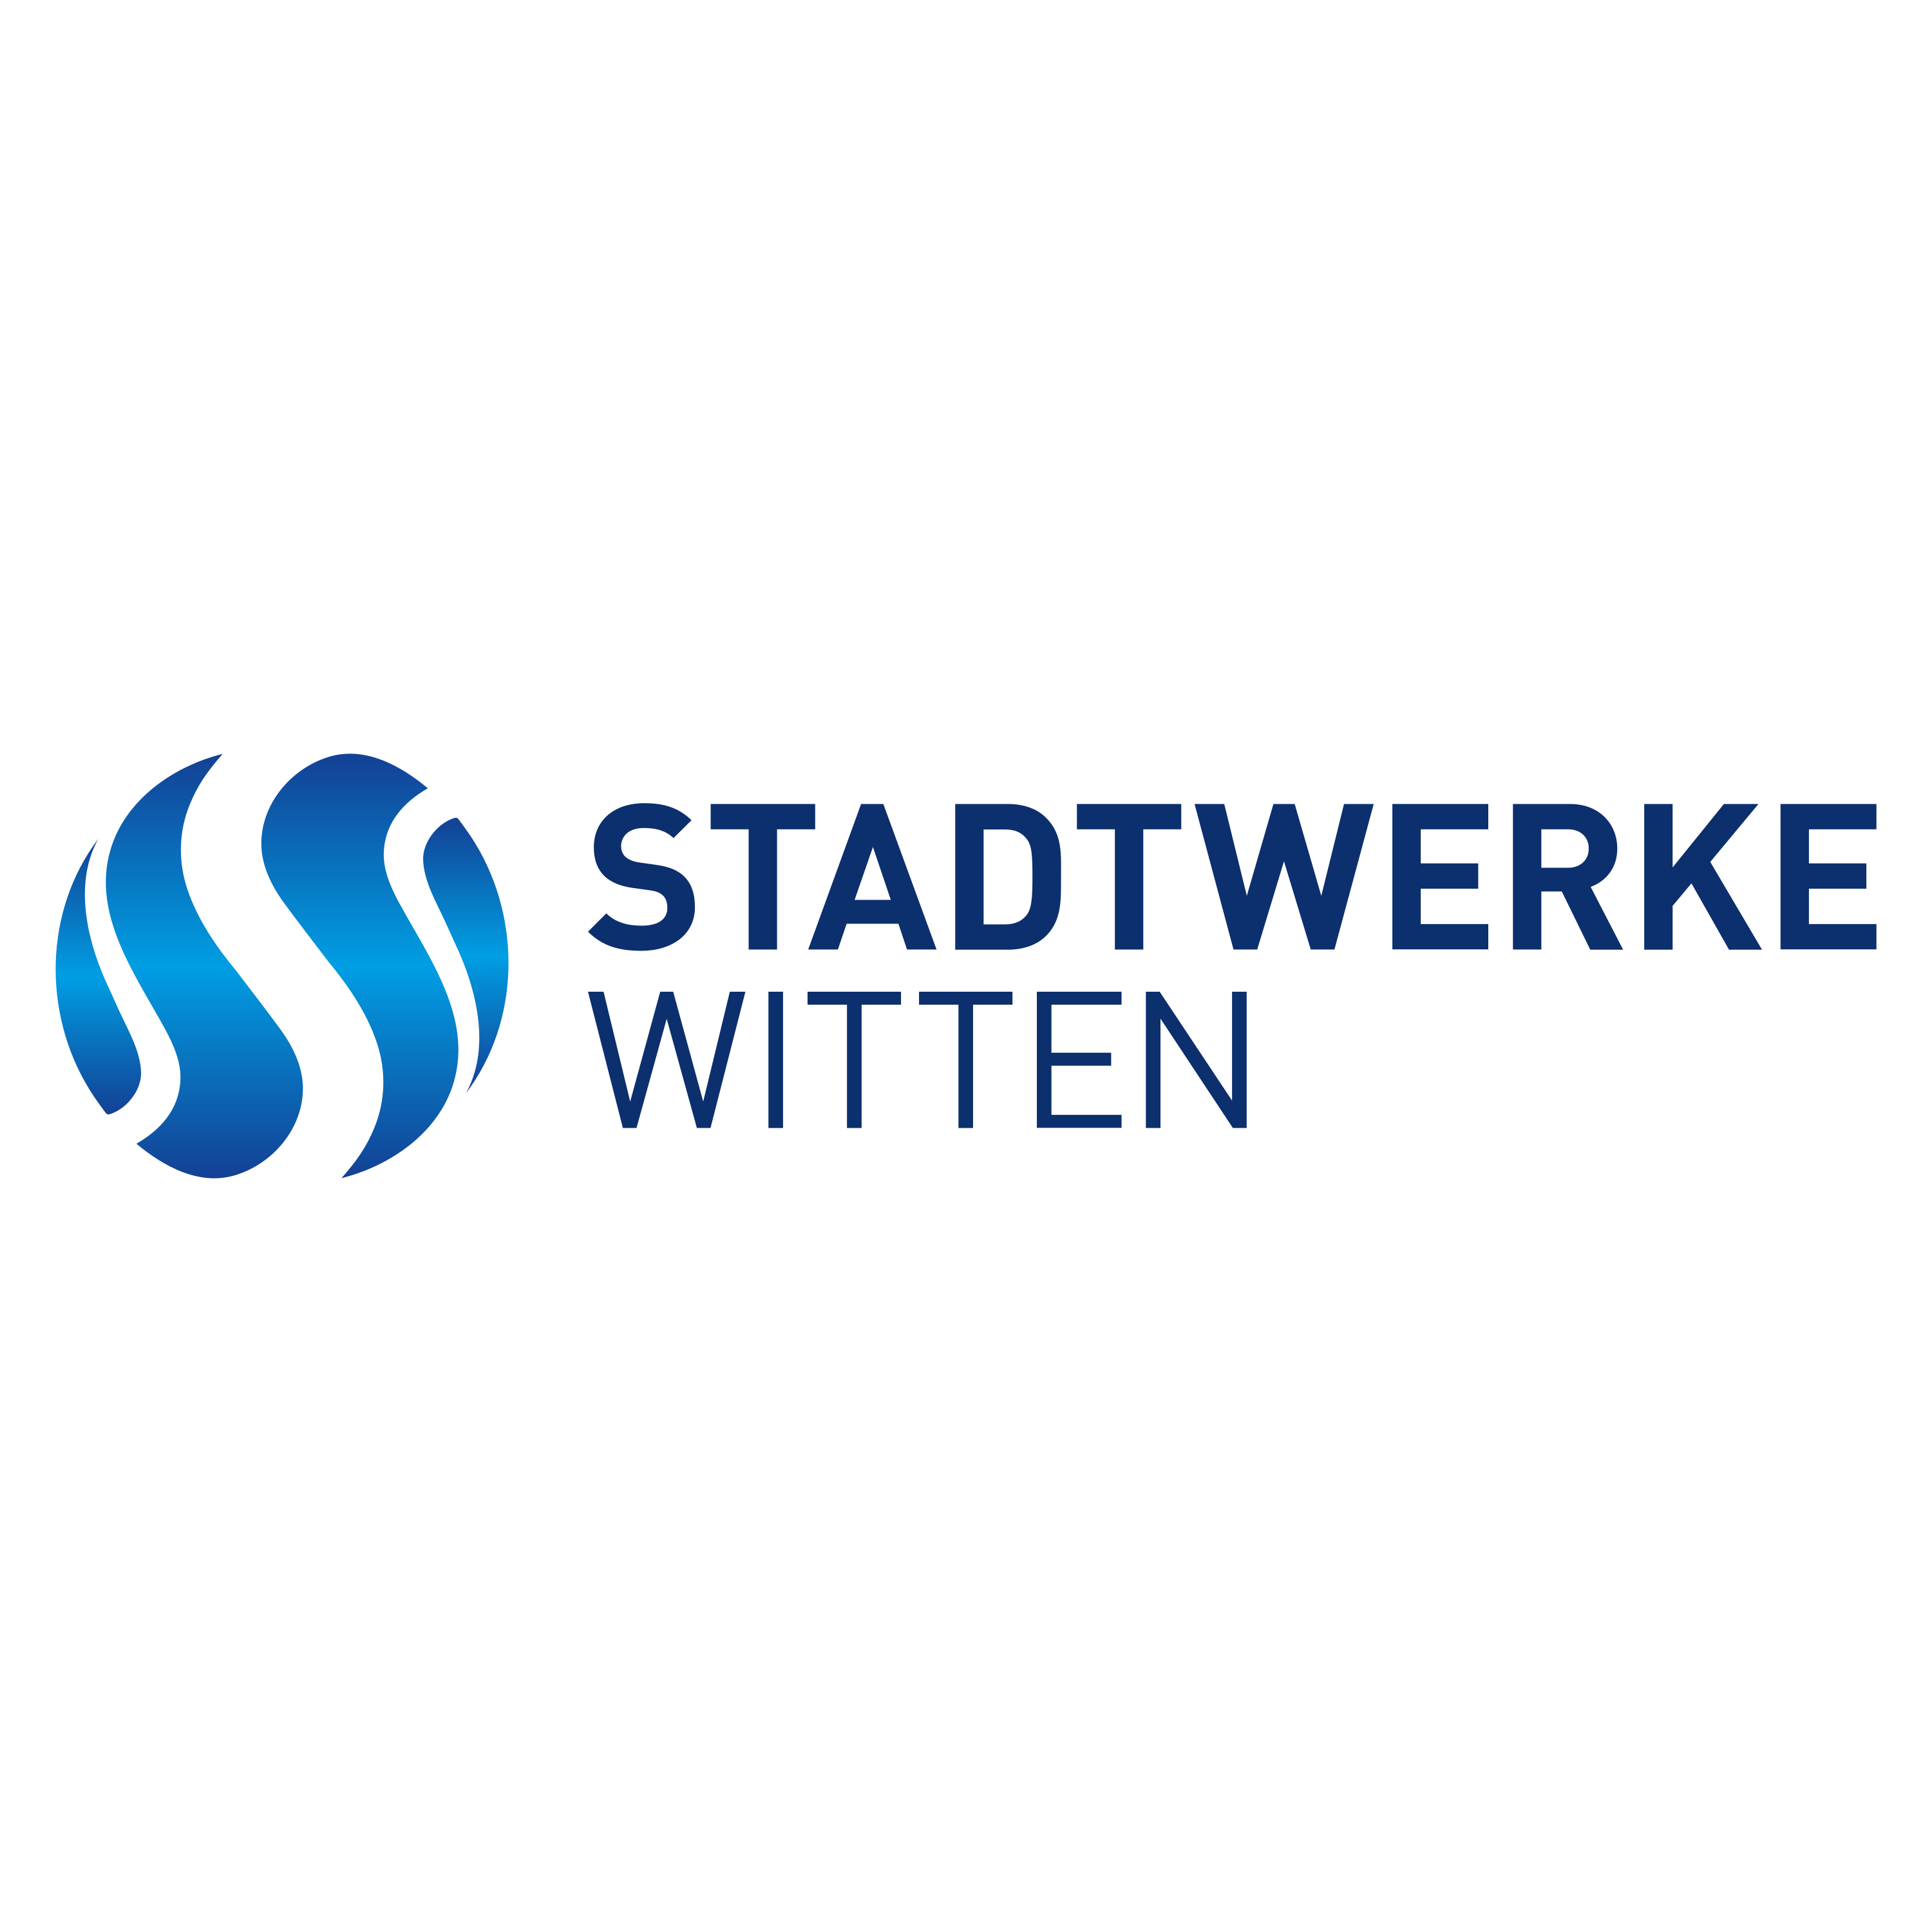 Stadtwerke Witten GmBH Logo  Transparent Image